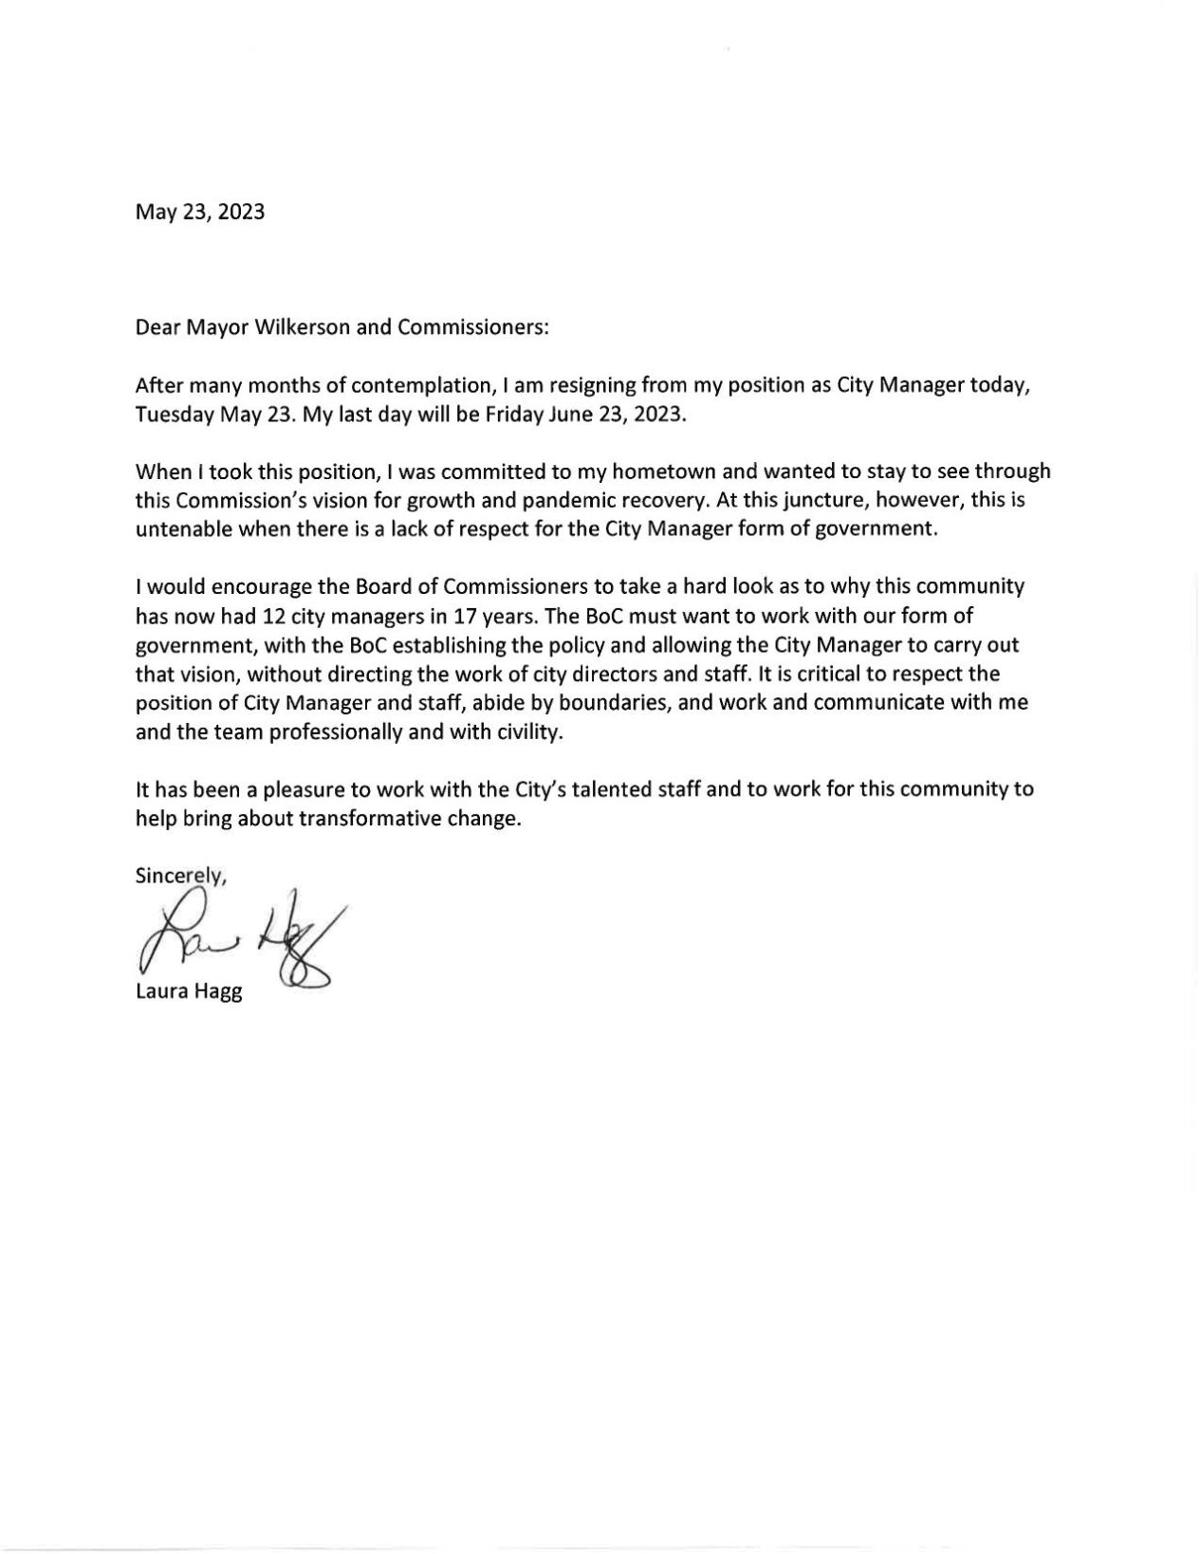 Laura Hagg resignation letter